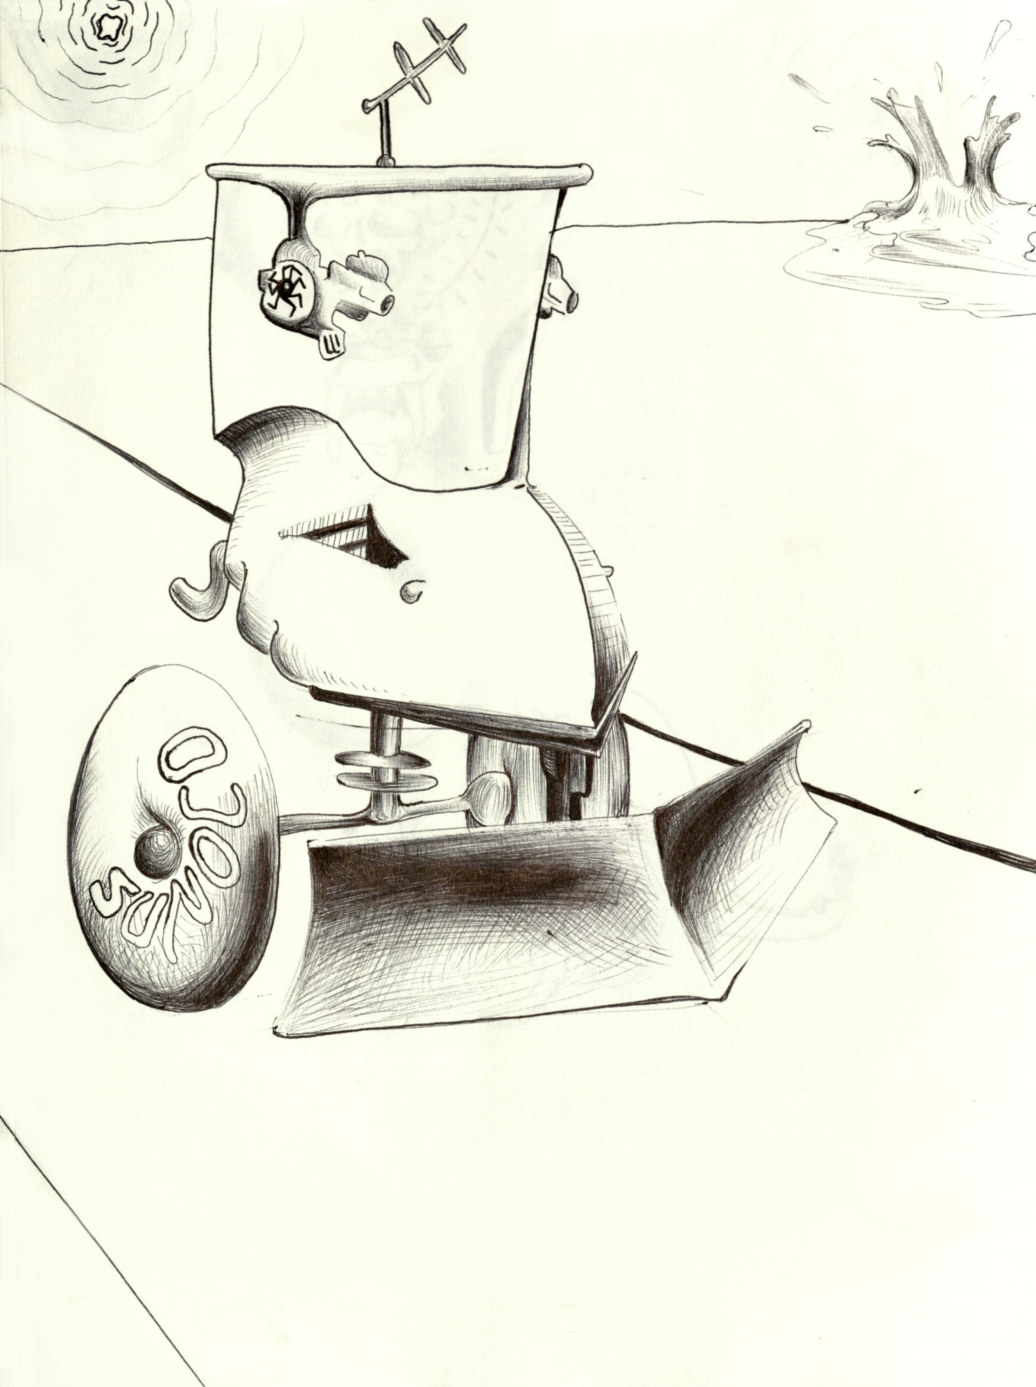 Sunoco (12x9) - Ink drawing of a futuristic snowplow